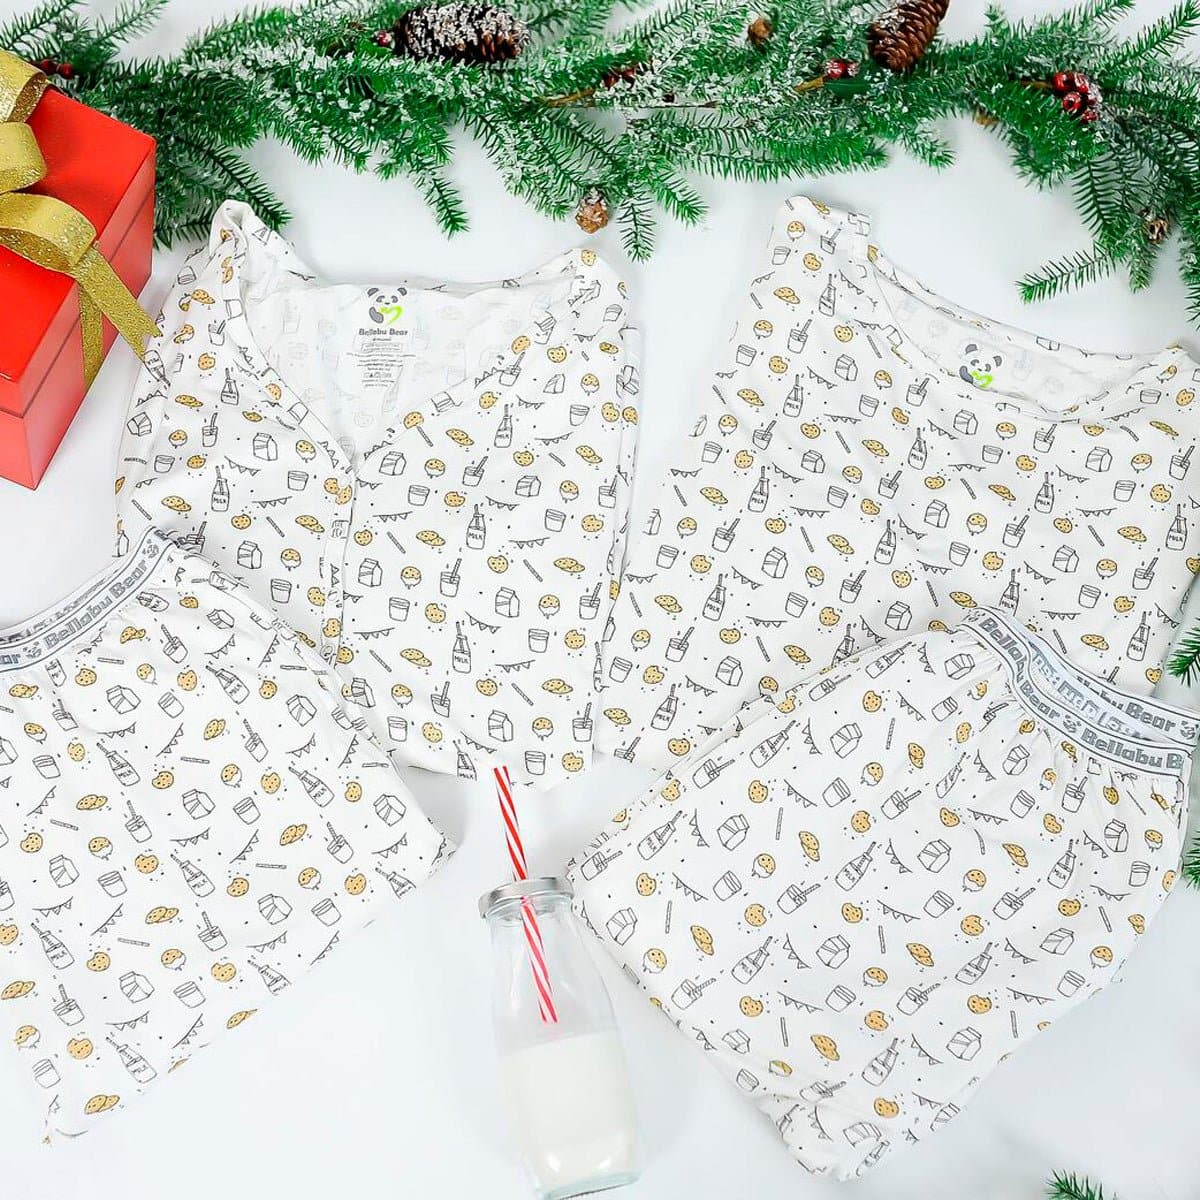 Christmas Eve Milk and Cookies Pajama Set in PINK